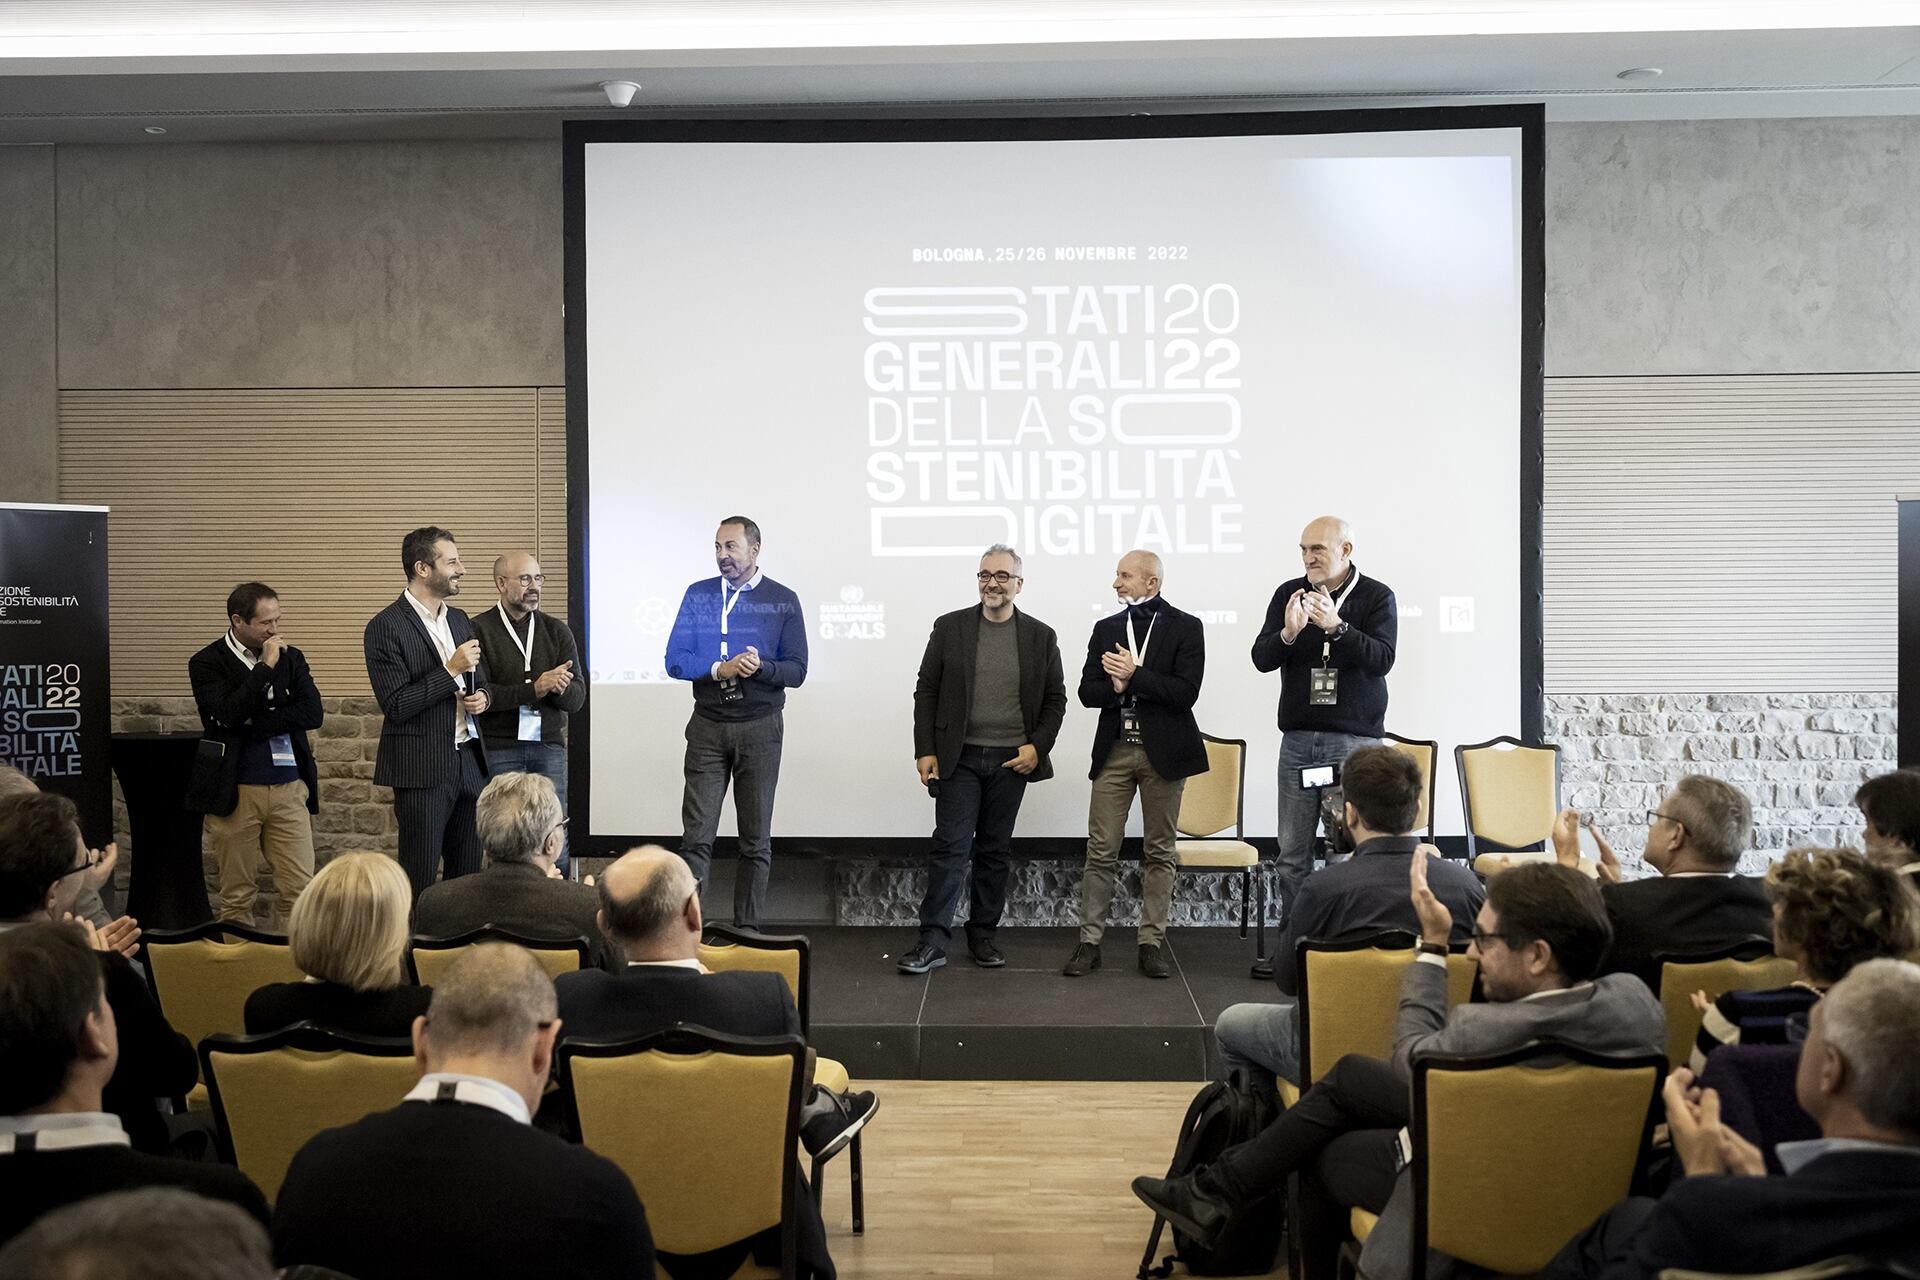 Stefano Epifani: organizacijski odbor događaja "Stati Generali della Sostenibilità Digitale", organiziranog u Bologni (Italija) 25. i 26. studenog 2022.